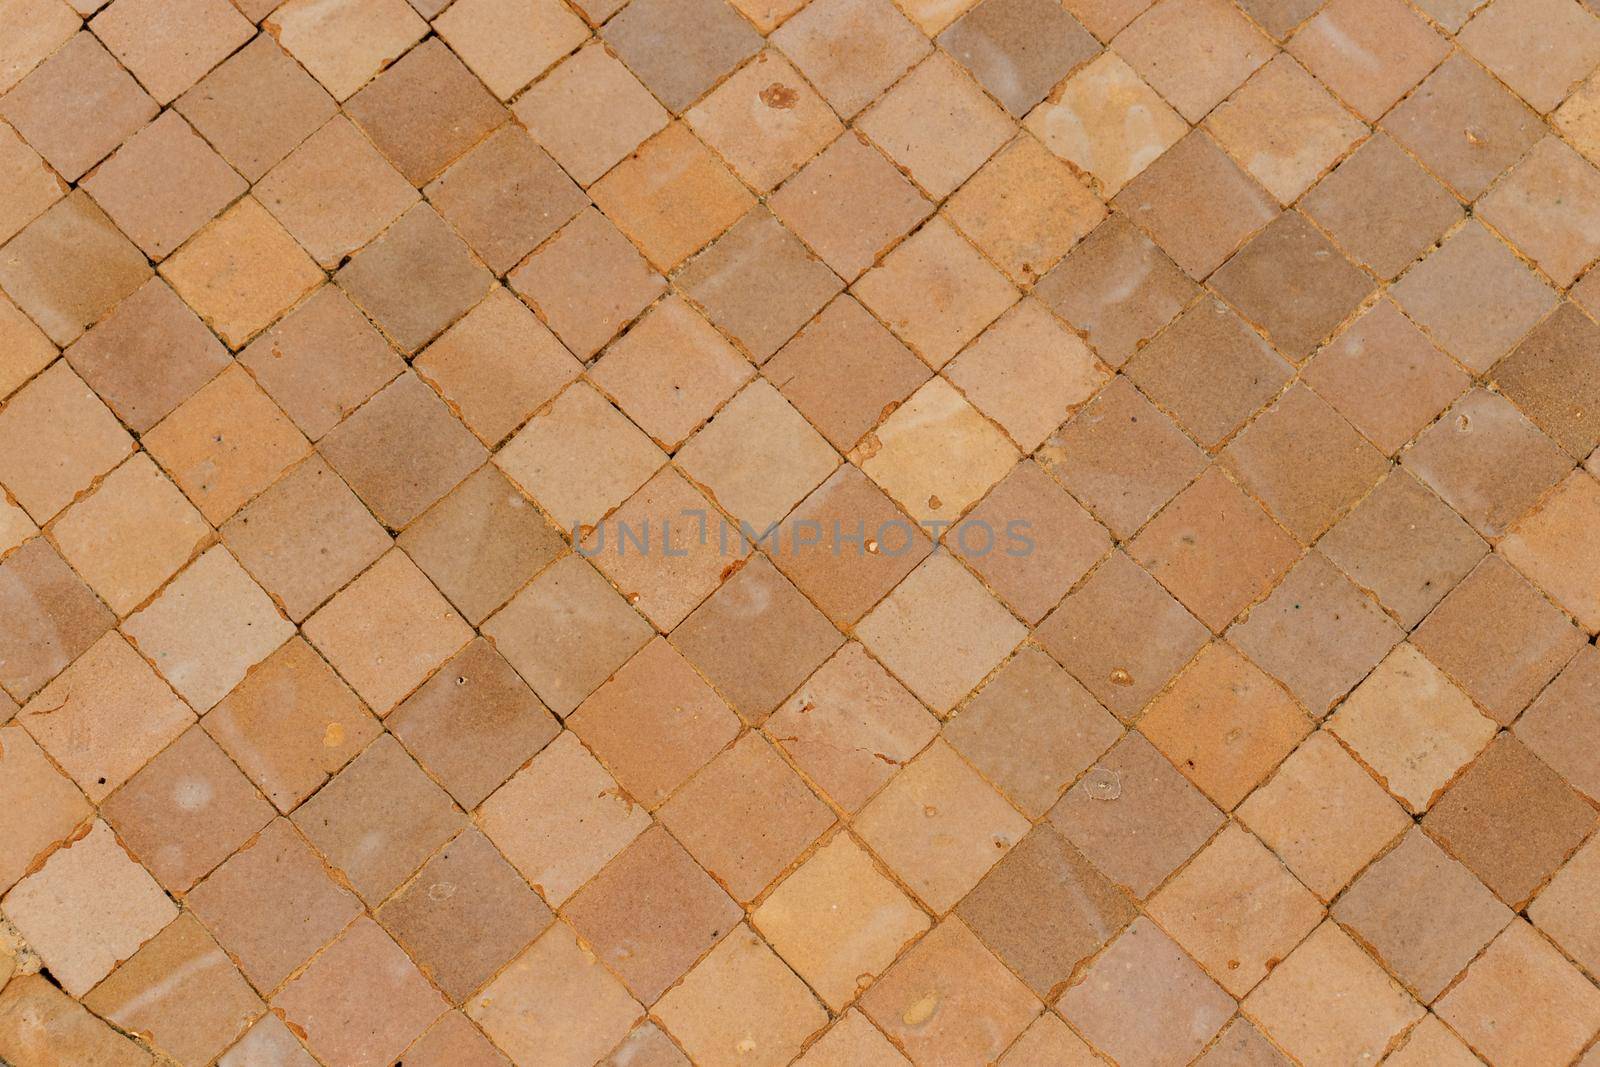 Brown brick floor vintage texture background.